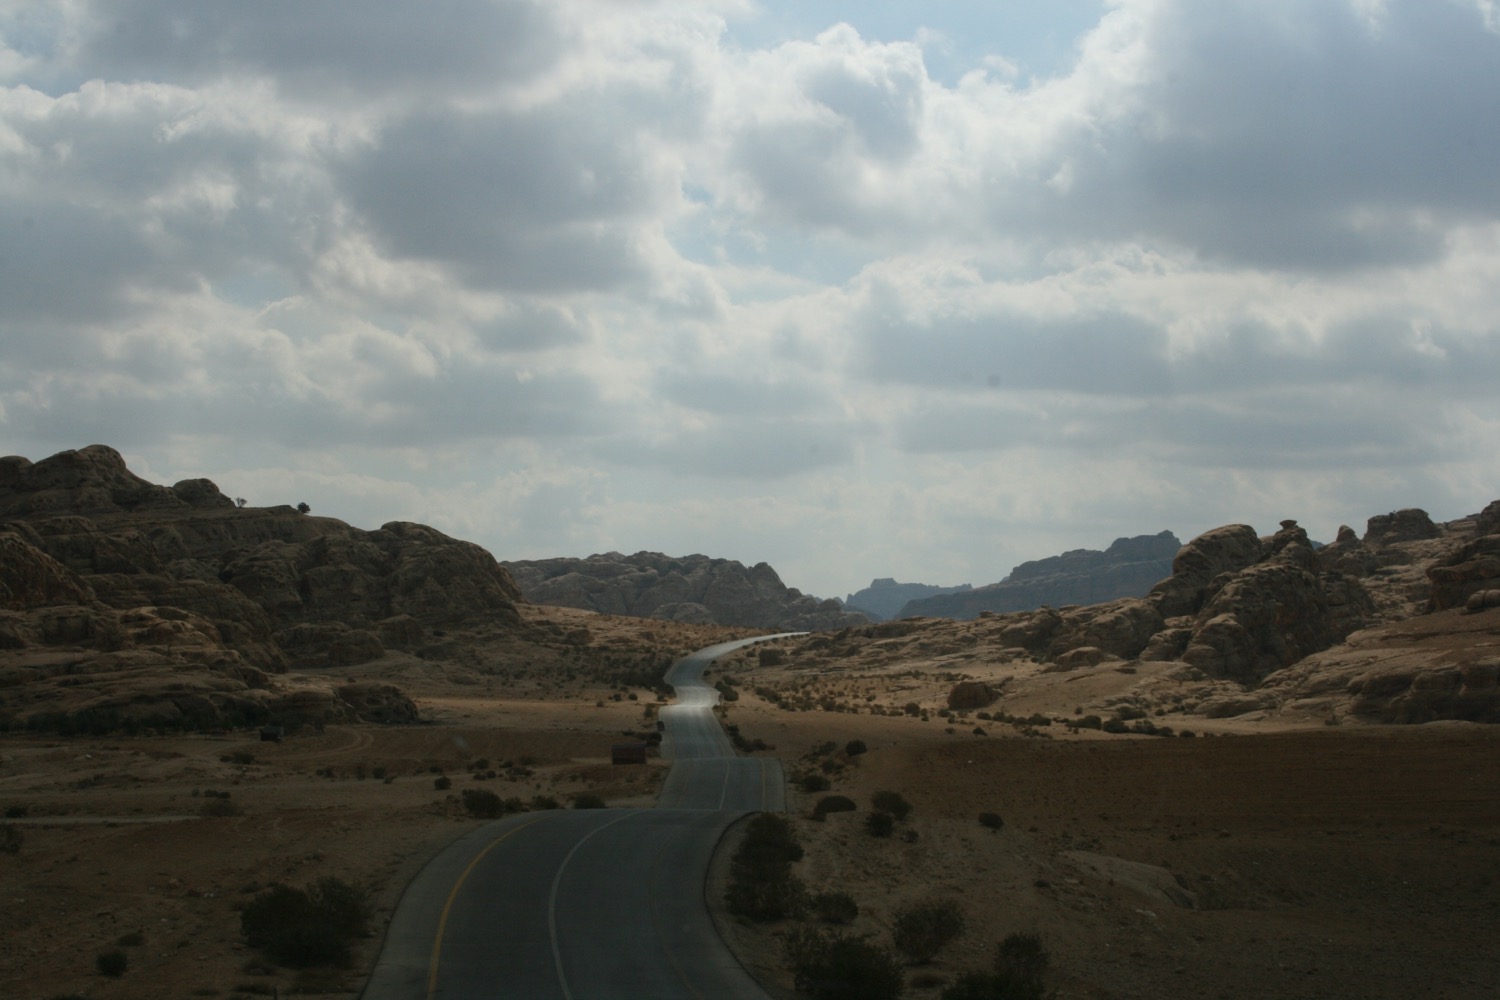 a road through a desert